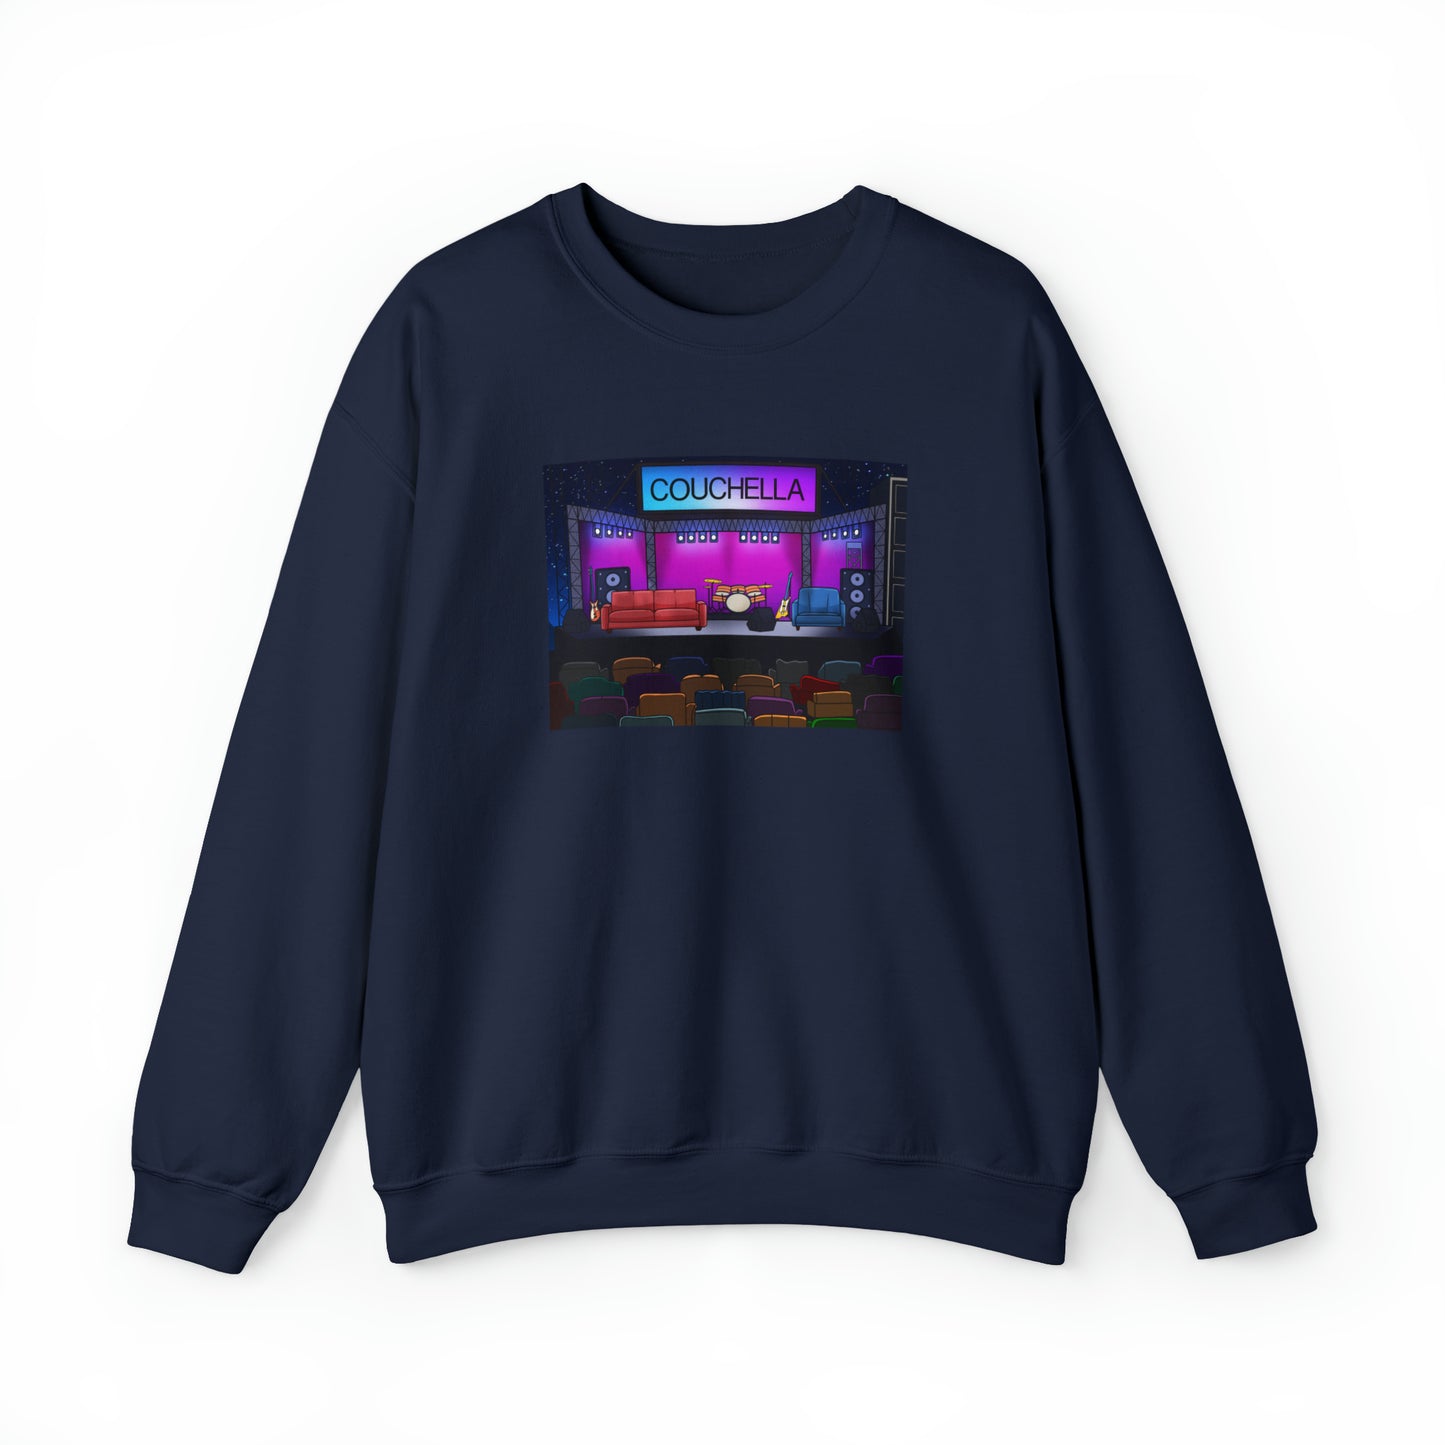 Custom Parody Crewneck Sweatshirt, Couchella